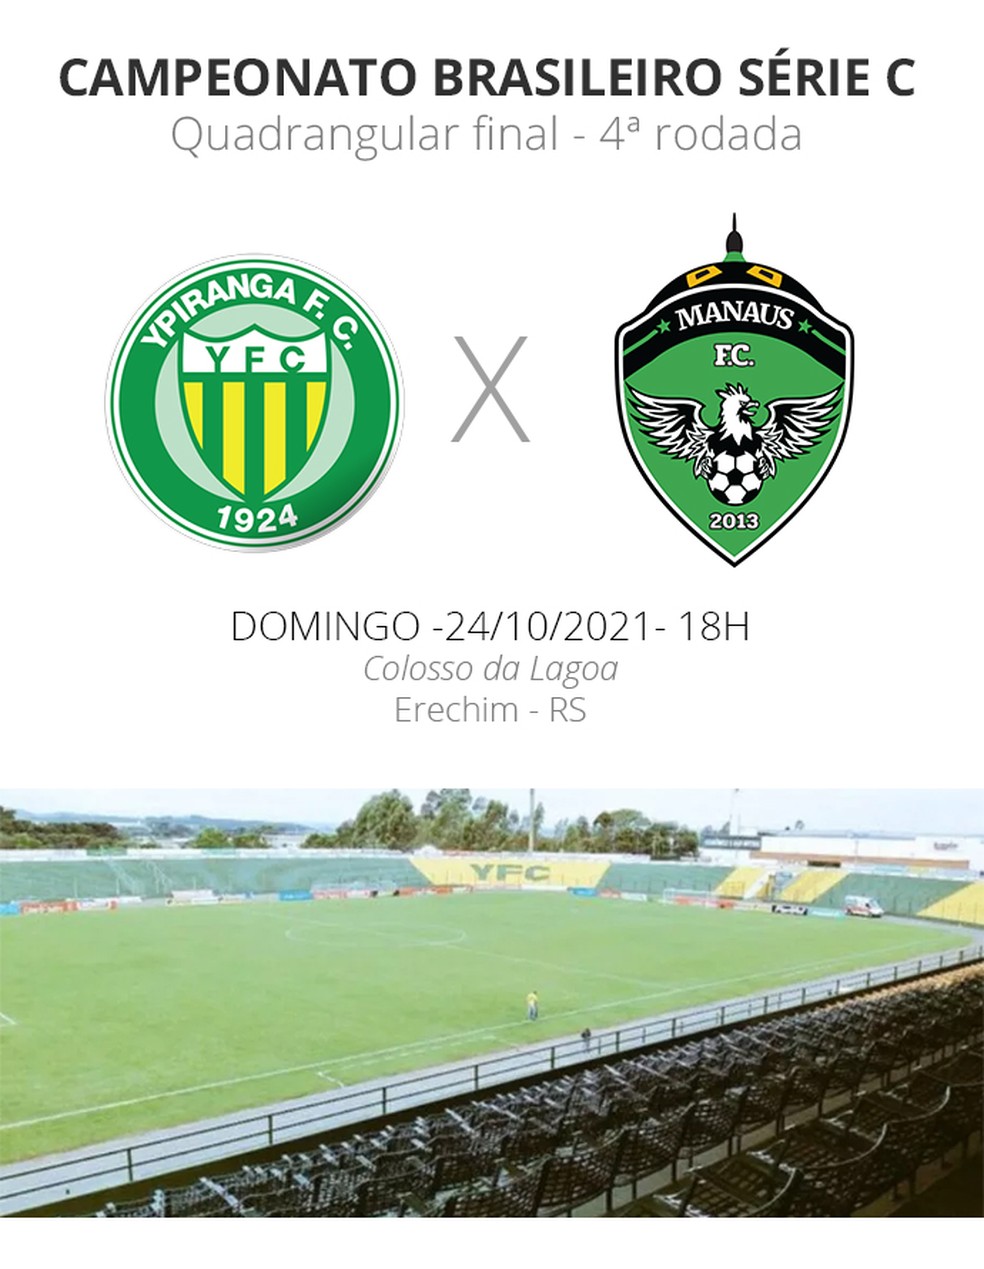 SERVIÇO DE JOGO – YPIRANGA X BRASIL - Ypiranga Futebol Clube